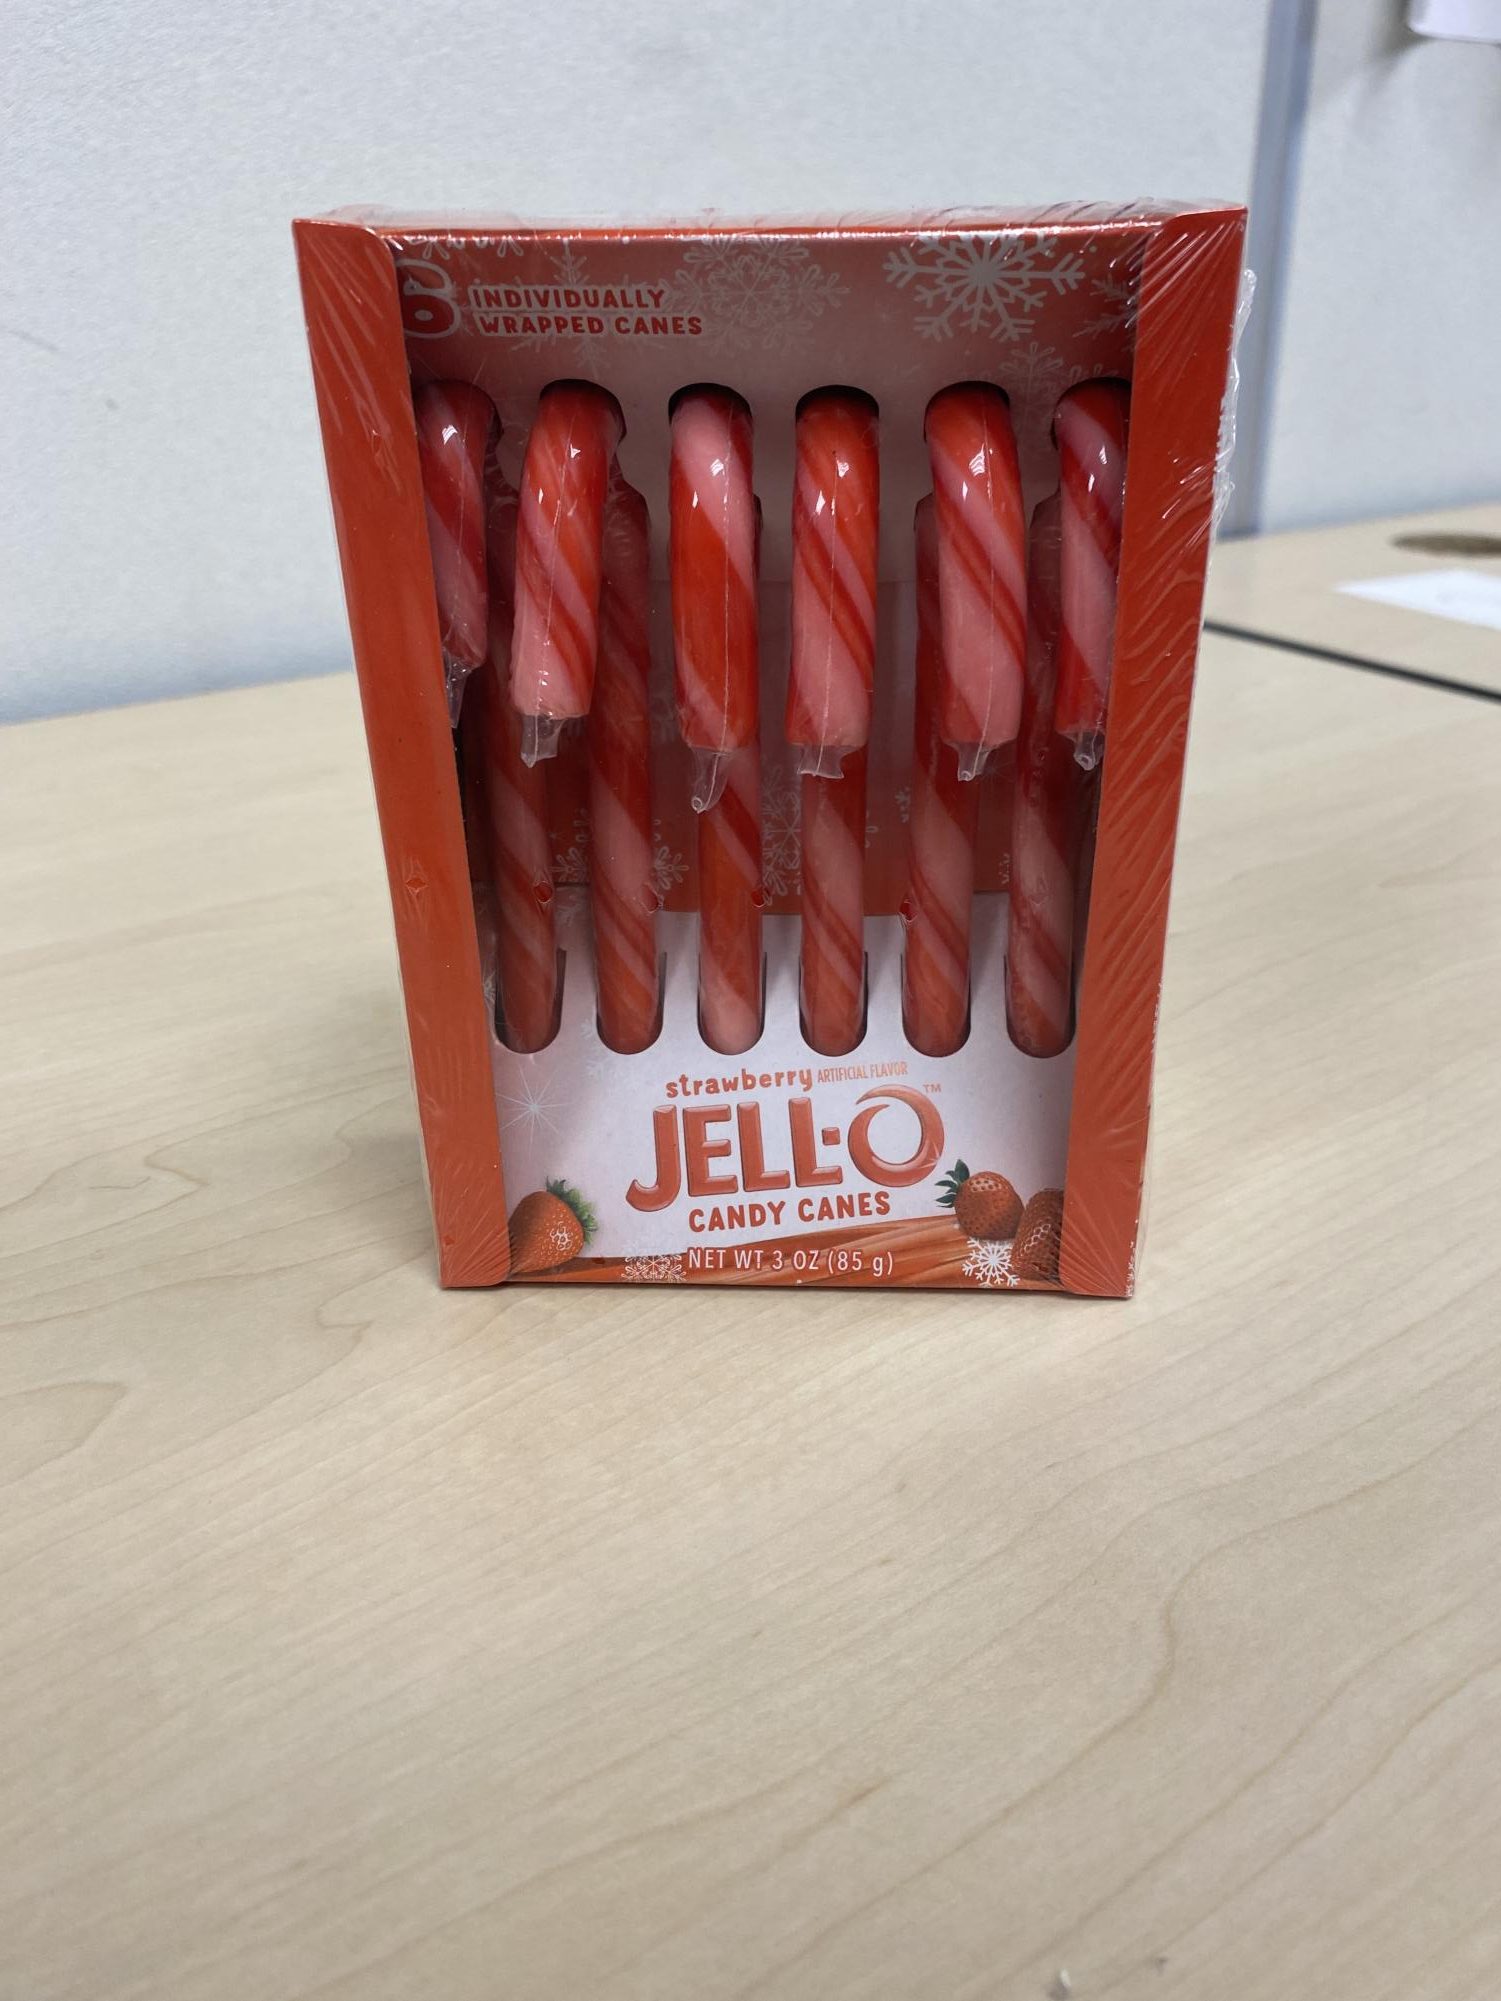 Jello candy canes